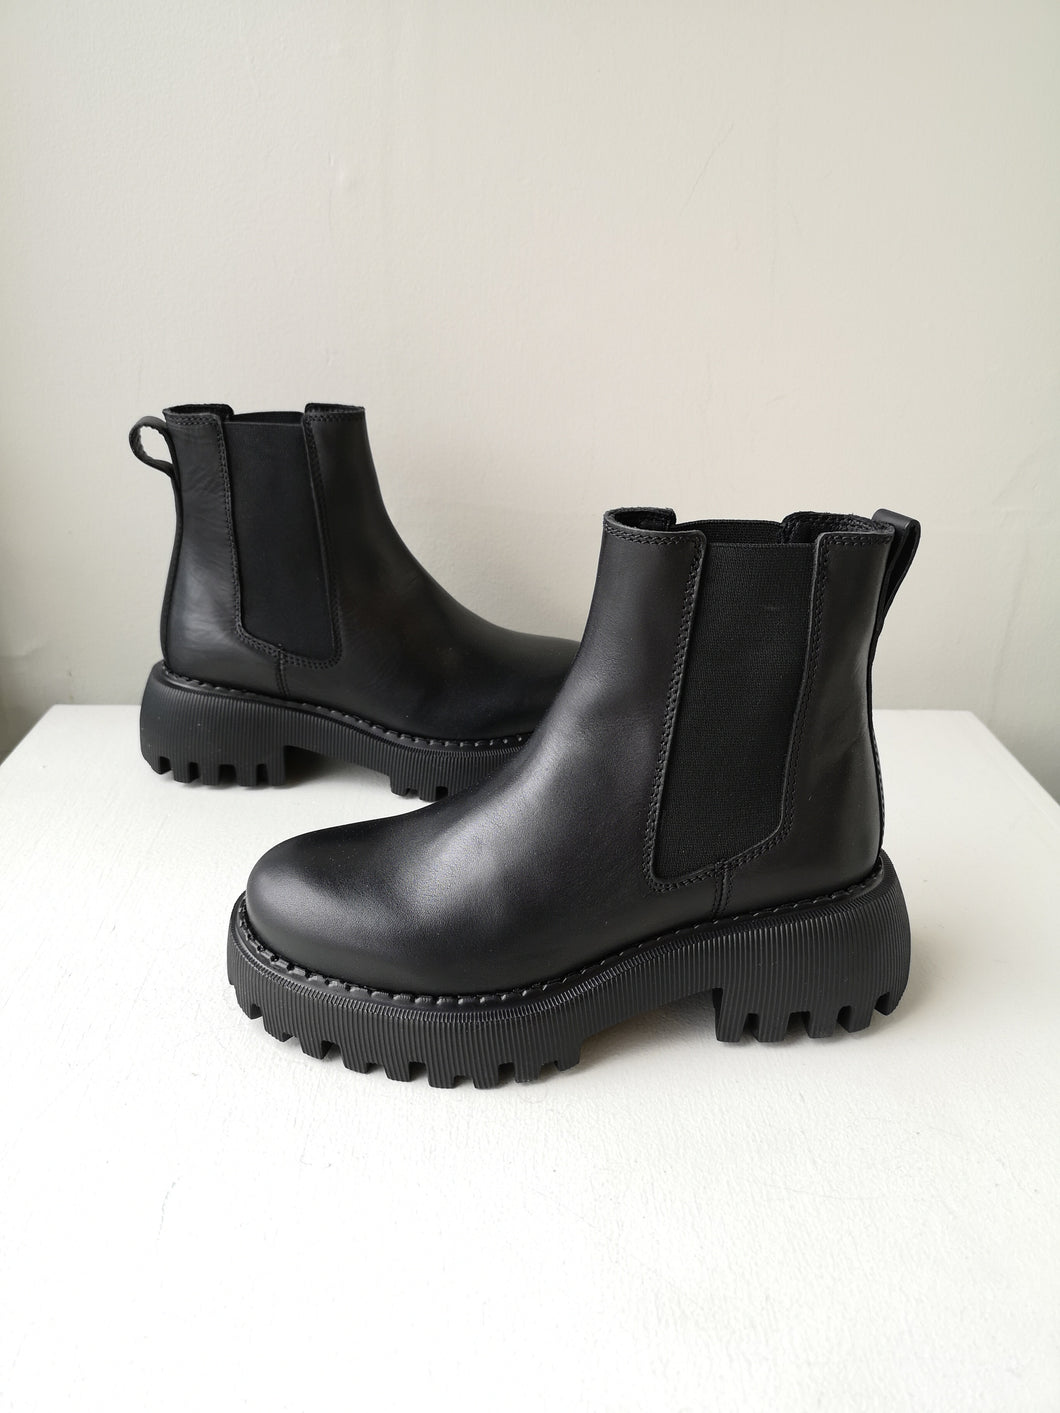 Shoe The Bear - Posey Chelsea Boot - Black/Black Sole